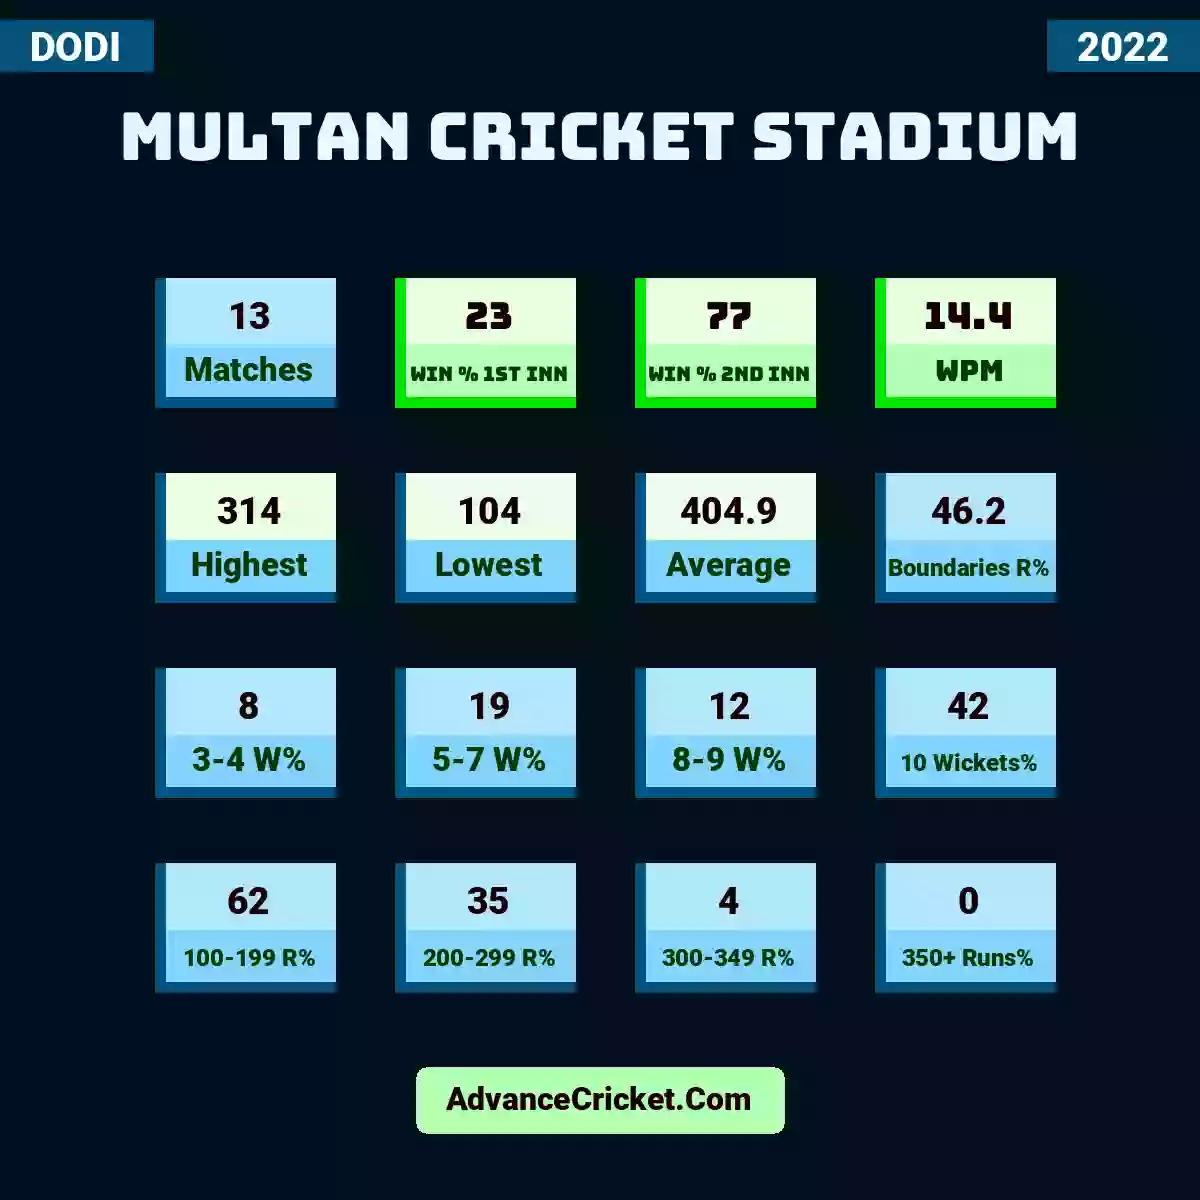 Image showing Multan Cricket Stadium with Matches: 13, Win % 1st Inn: 23, Win % 2nd Inn: 77, WPM: 14.4, Highest: 314, Lowest: 104, Average: 404.9, Boundaries R%: 46.2, 3-4 W%: 8, 5-7 W%: 19, 8-9 W%: 12, 10 Wickets%: 42, 100-199 R%: 62, 200-299 R%: 35, 300-349 R%: 4, 350+ Runs%: 0.